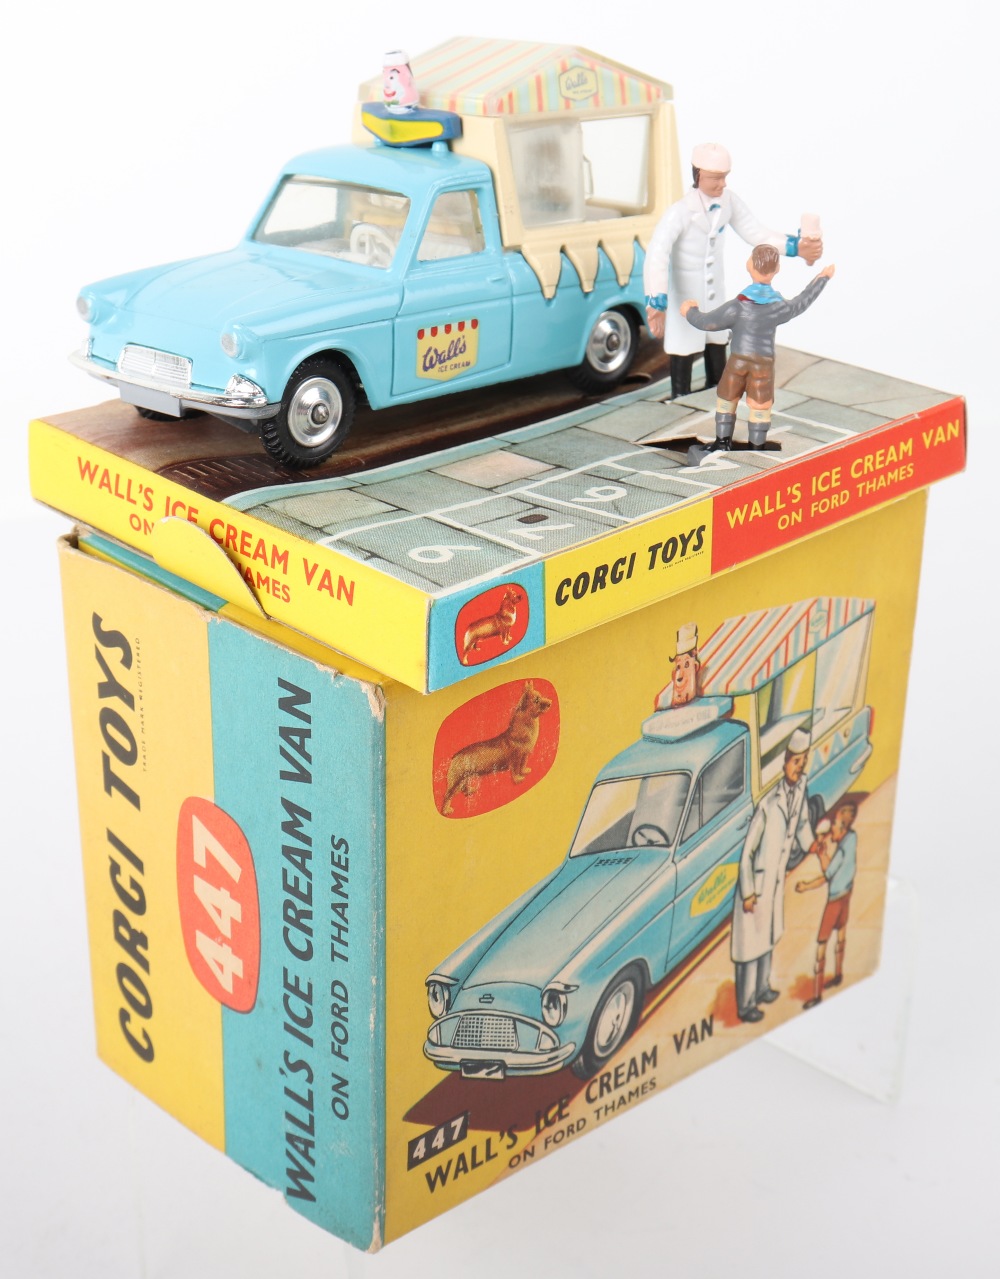 Corgi Toys 447 Walls Ice Cream Van on Ford Thames - Image 8 of 9